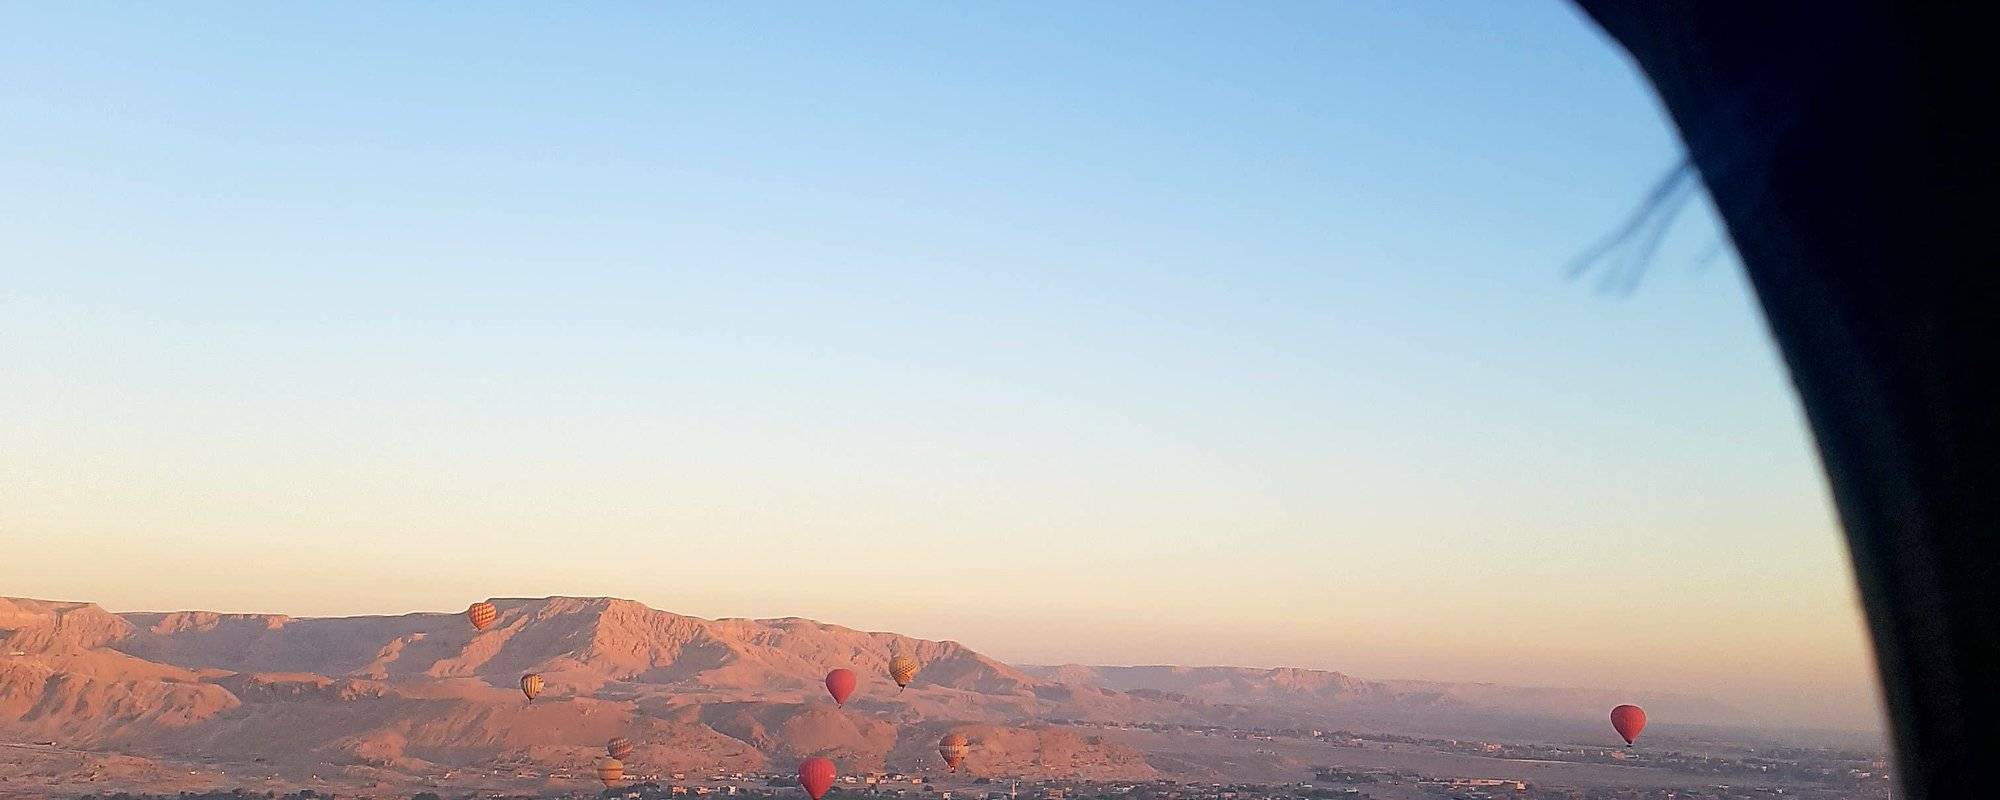 Hot air ballooning over Luxor, Egypt